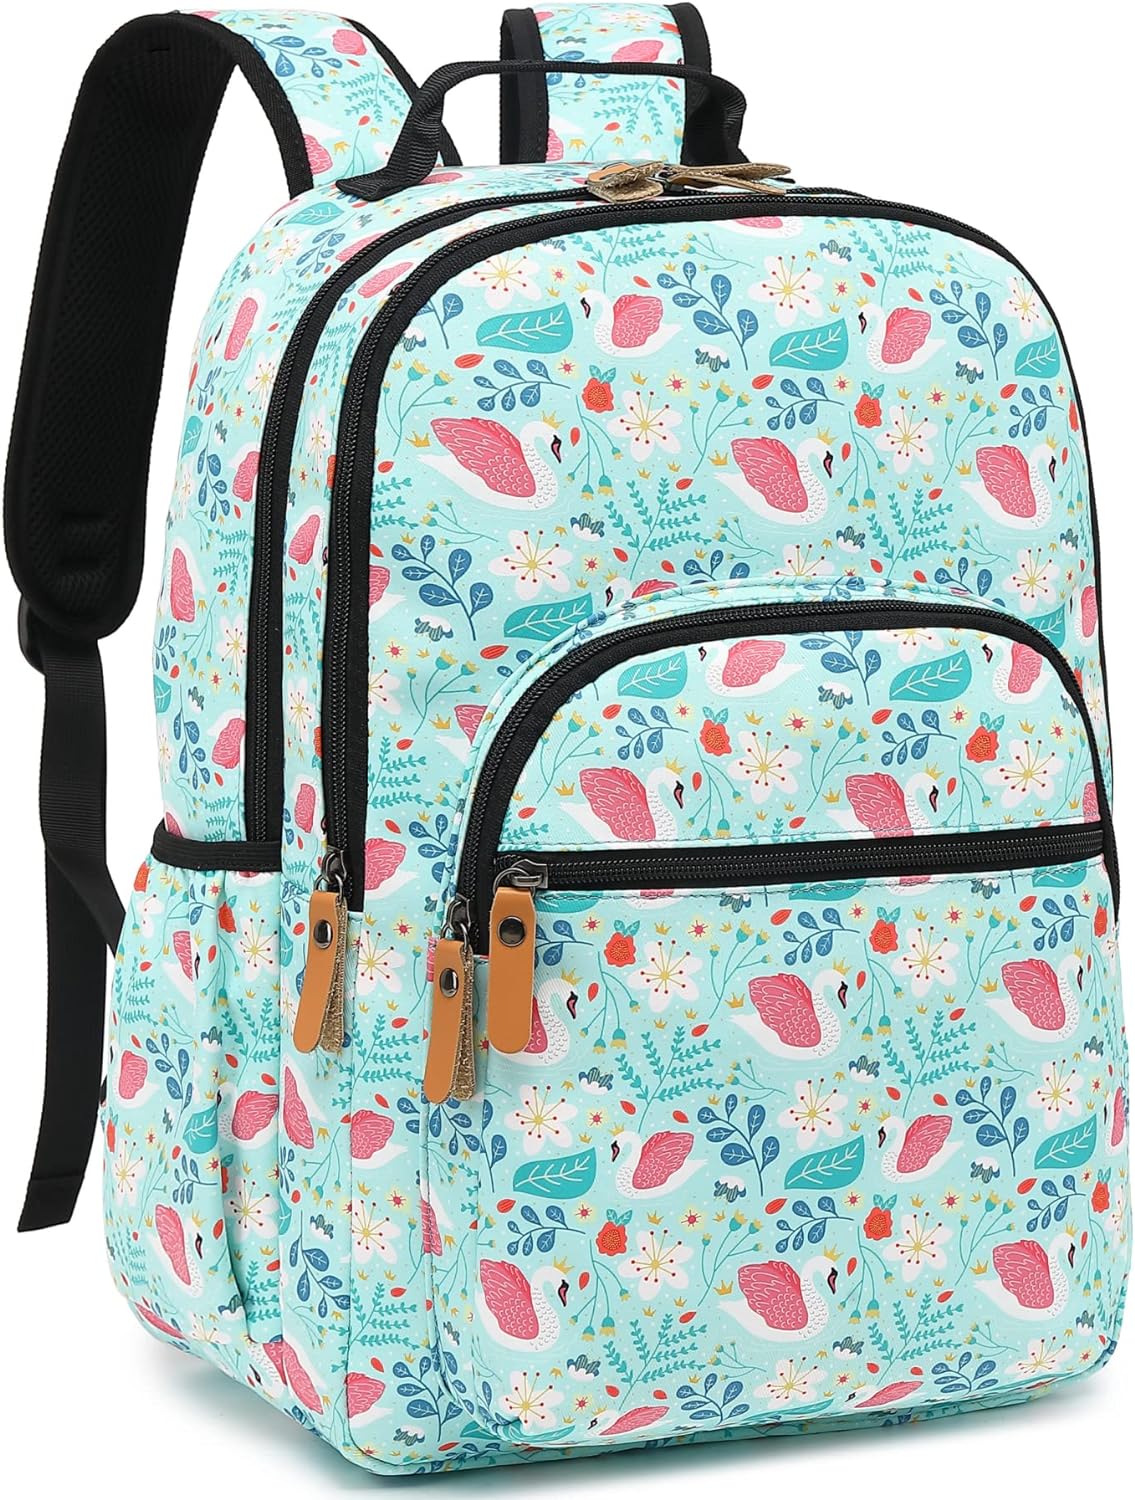 Leaper Water-resistant Floral Backpack Travel Bag bags Satchel